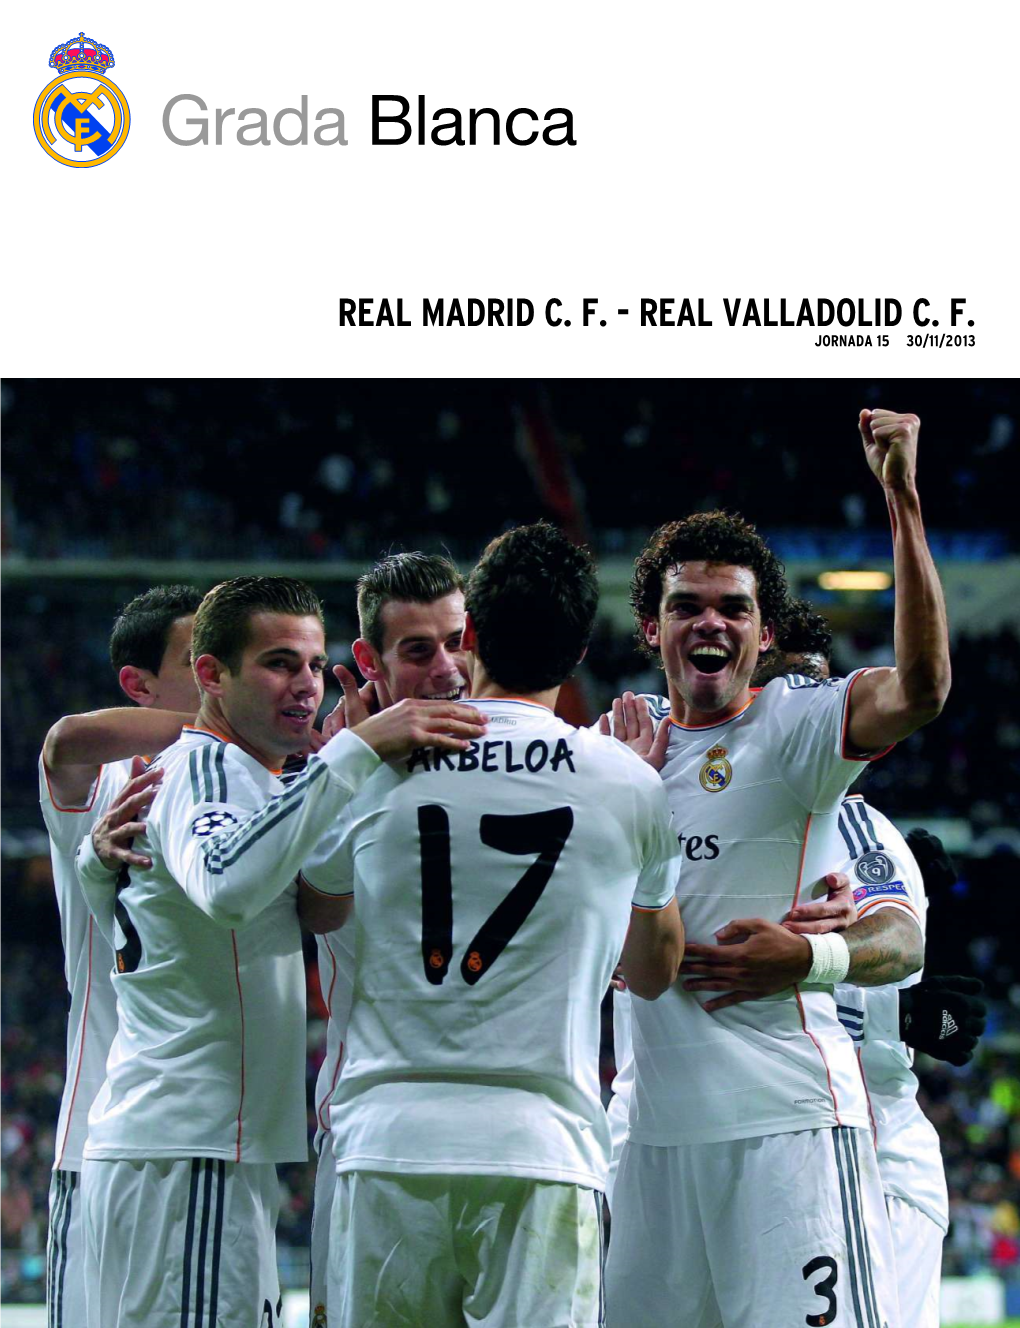 Real Madrid C. F. - Real Valladolid C